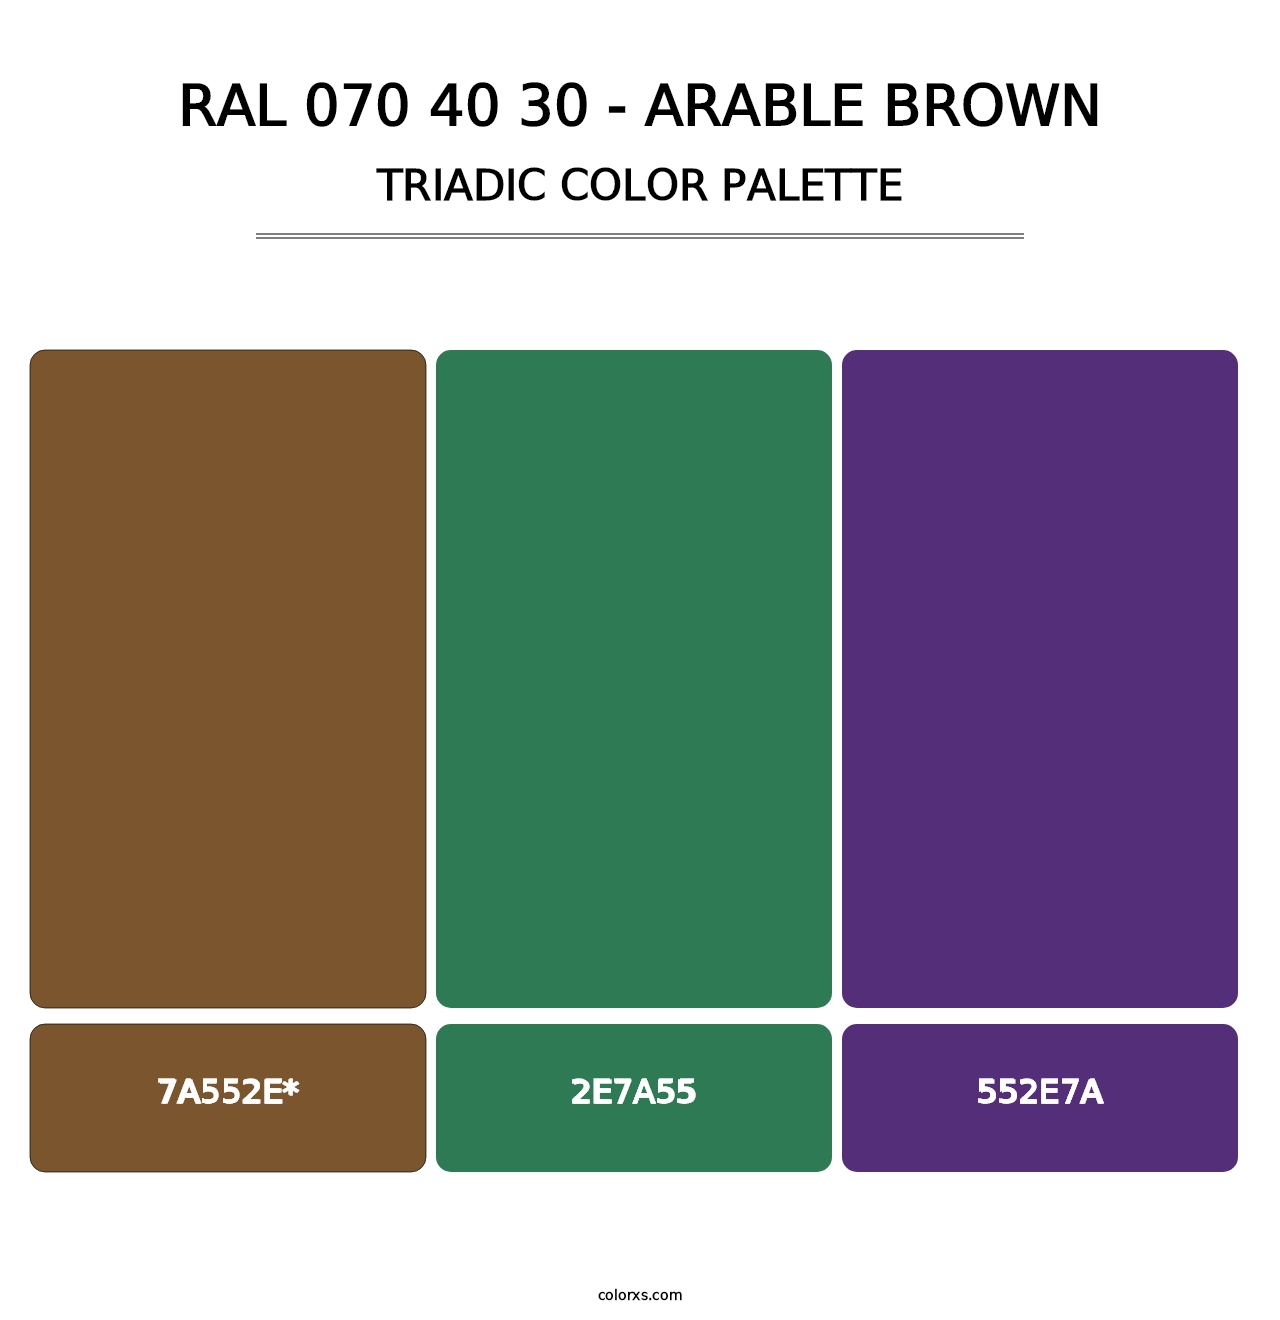 RAL 070 40 30 - Arable Brown - Triadic Color Palette